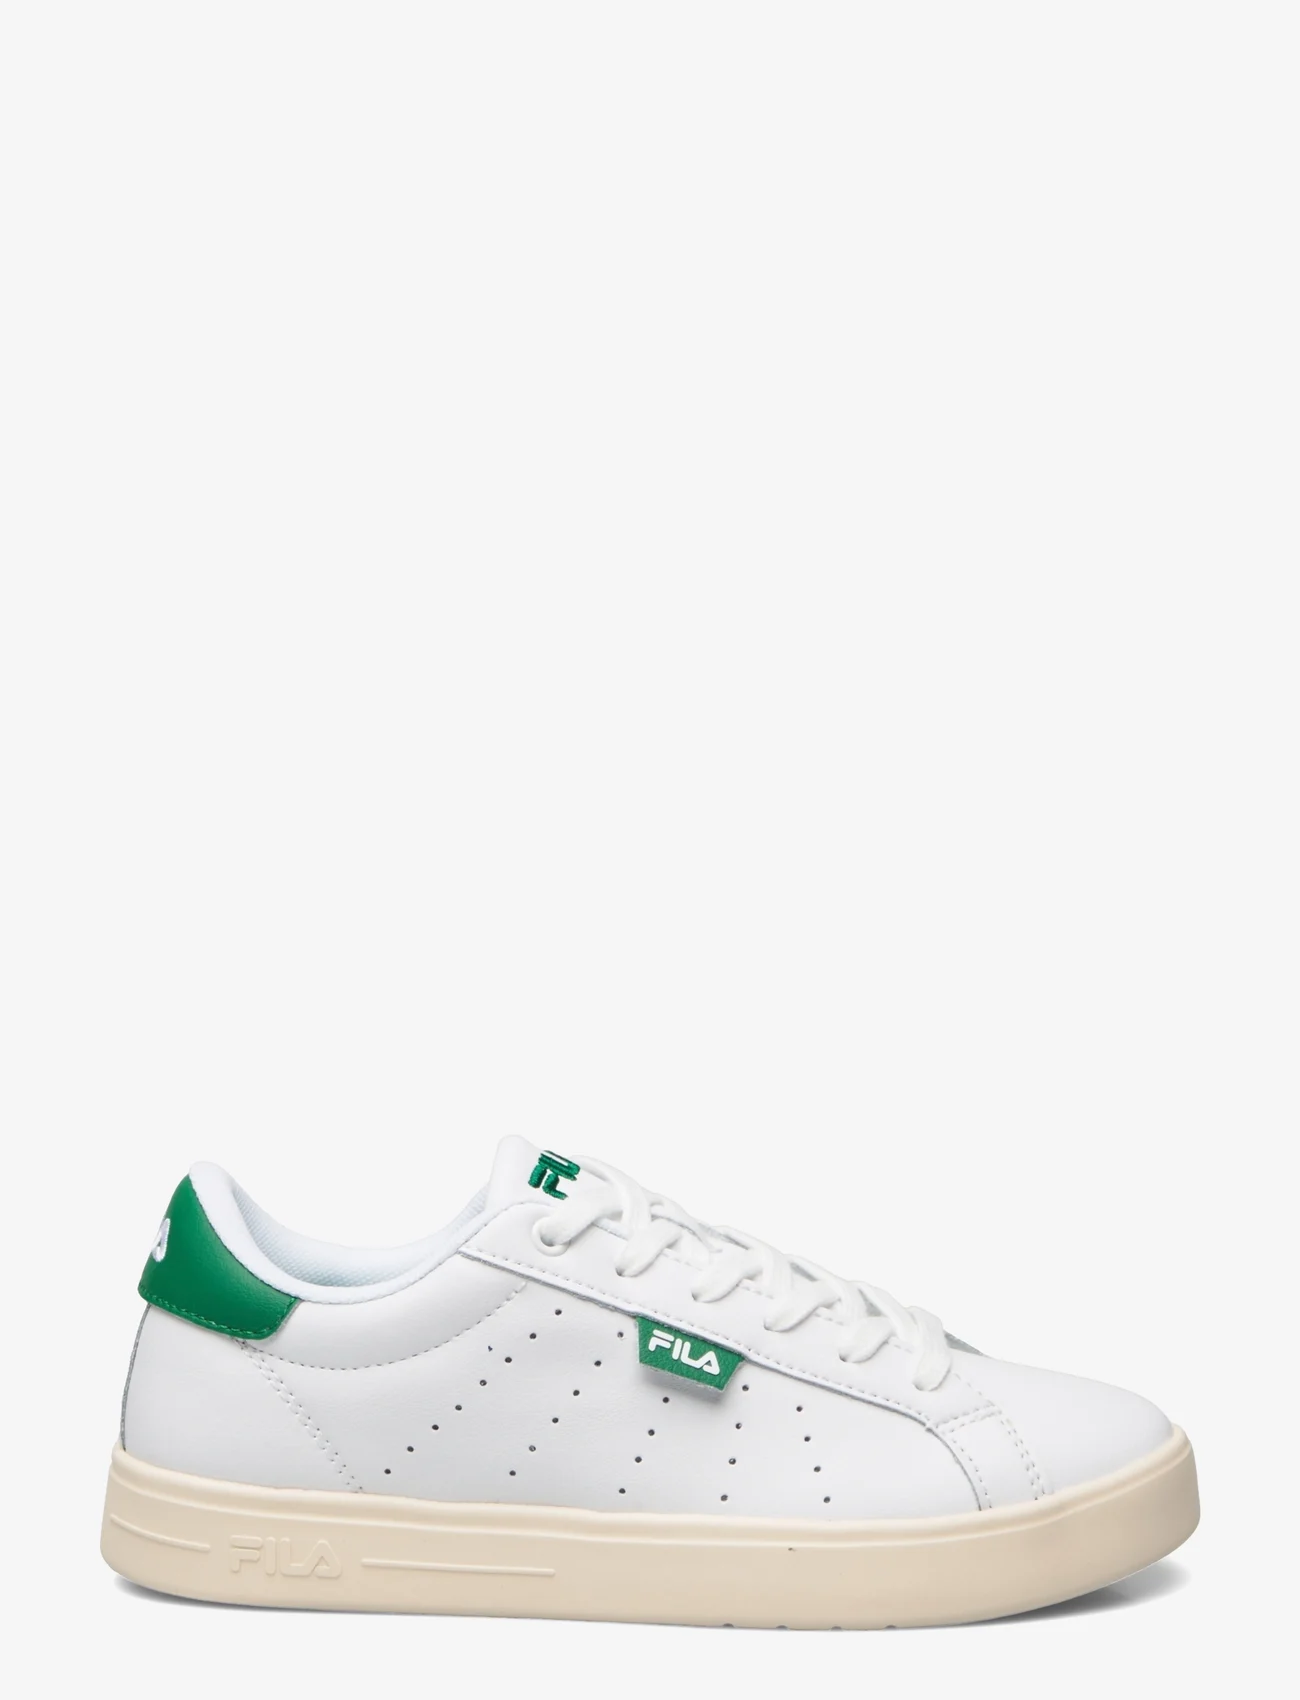 FILA - FILA LUSSO CB wmn - låga sneakers - white-verdant green - 1